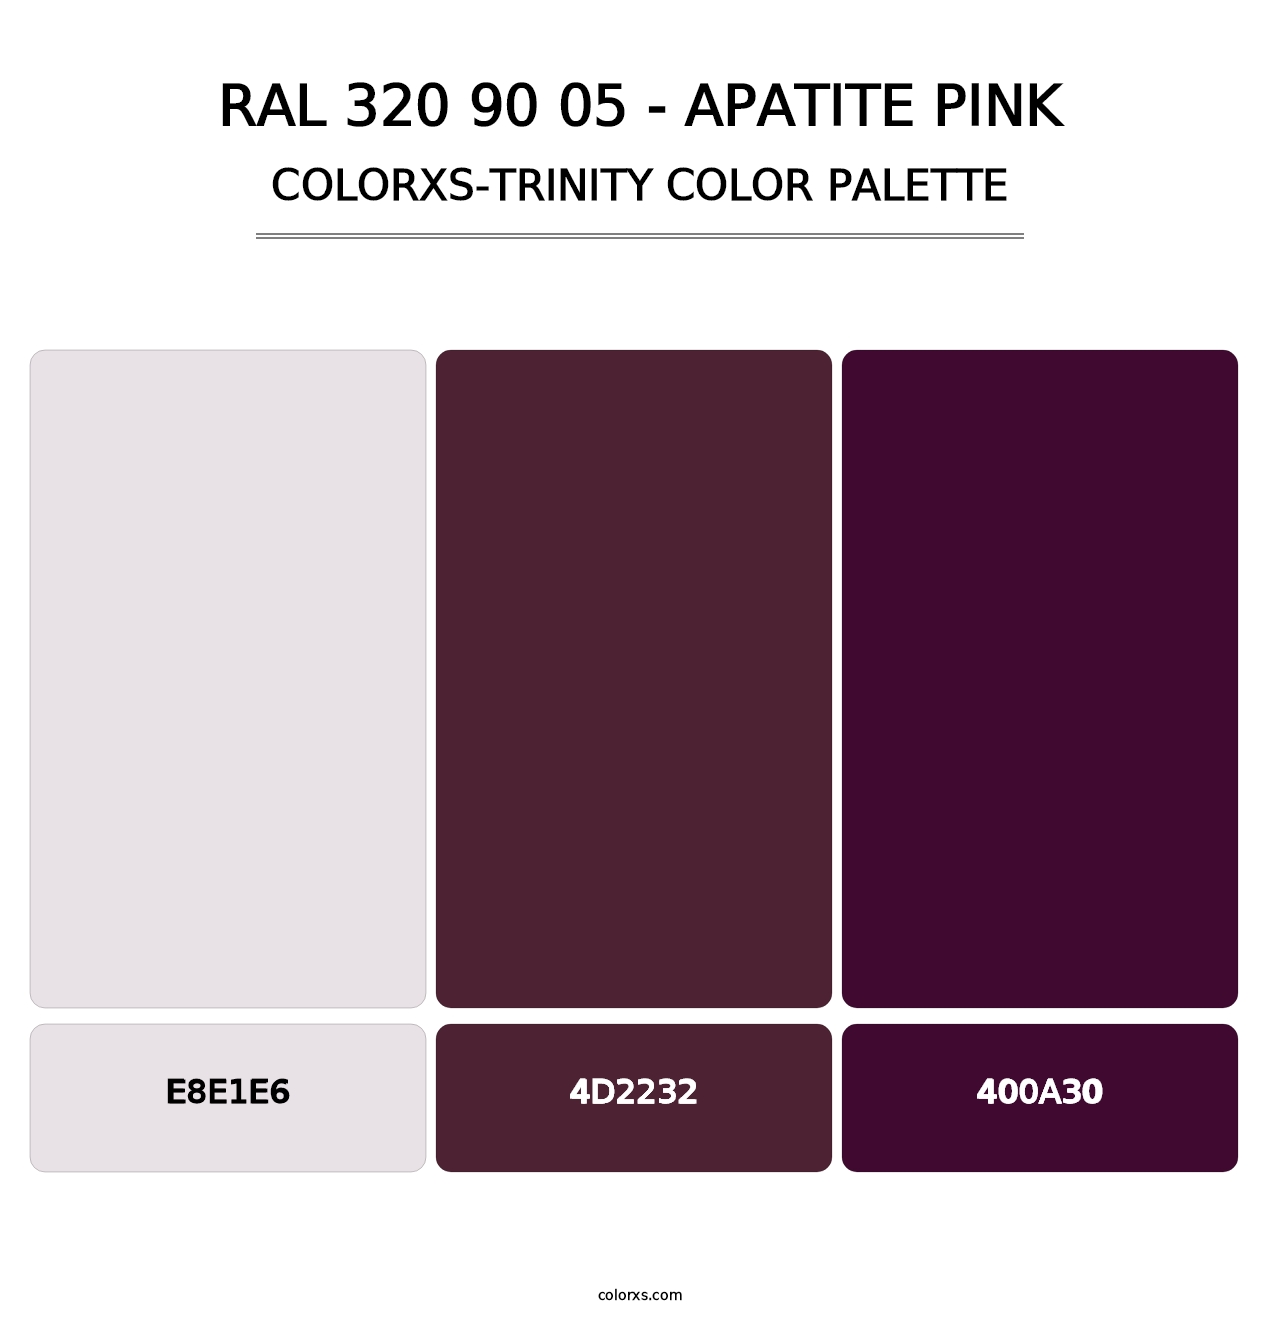 RAL 320 90 05 - Apatite Pink - Colorxs Trinity Palette